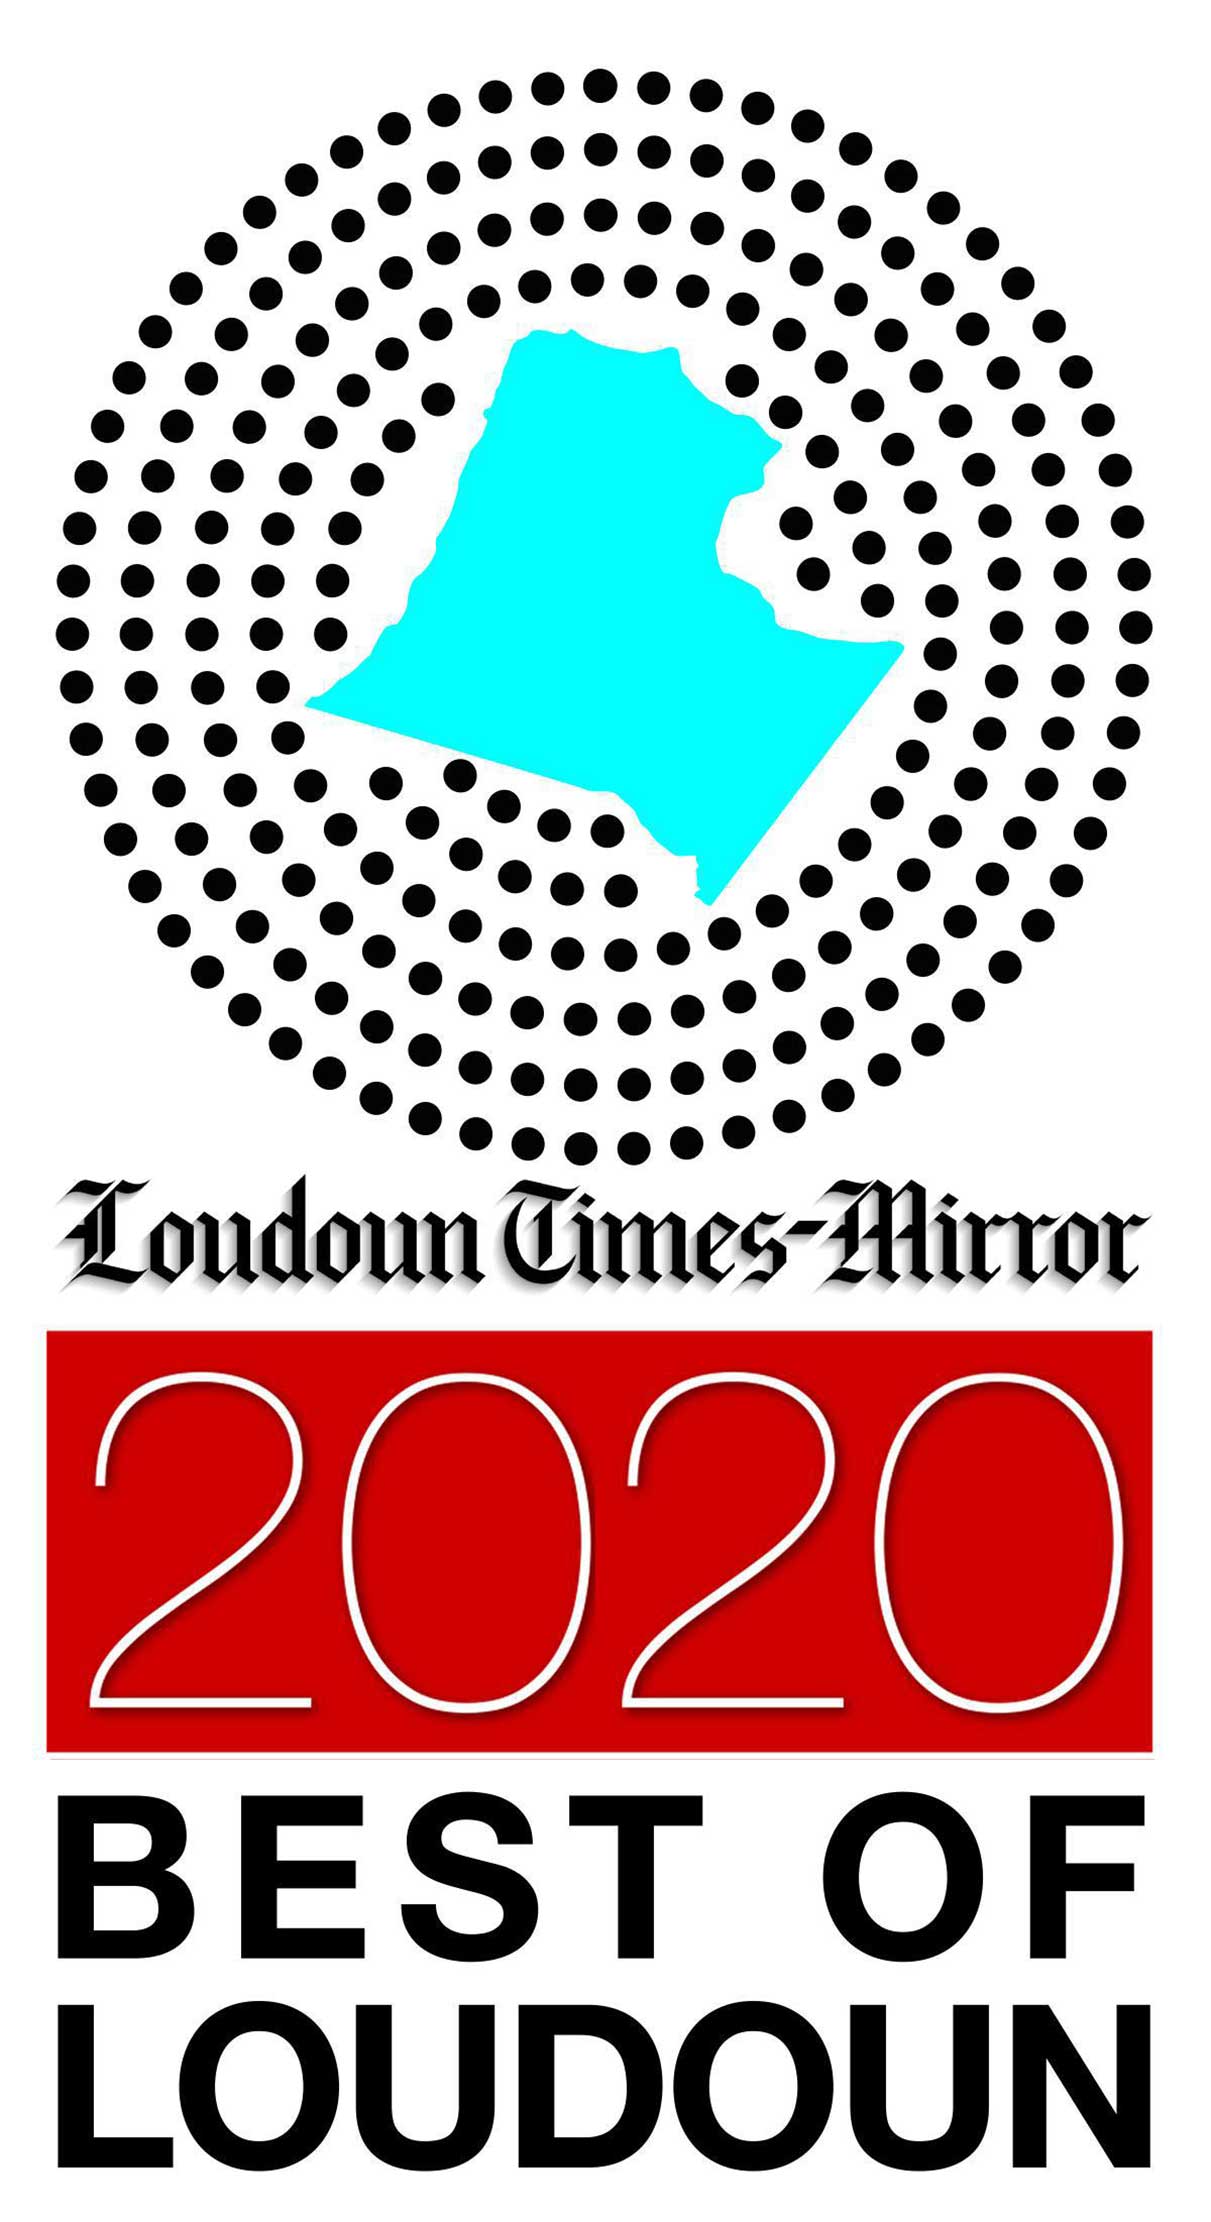 Loudoun Times Mirror - Best of Loudoun 2020